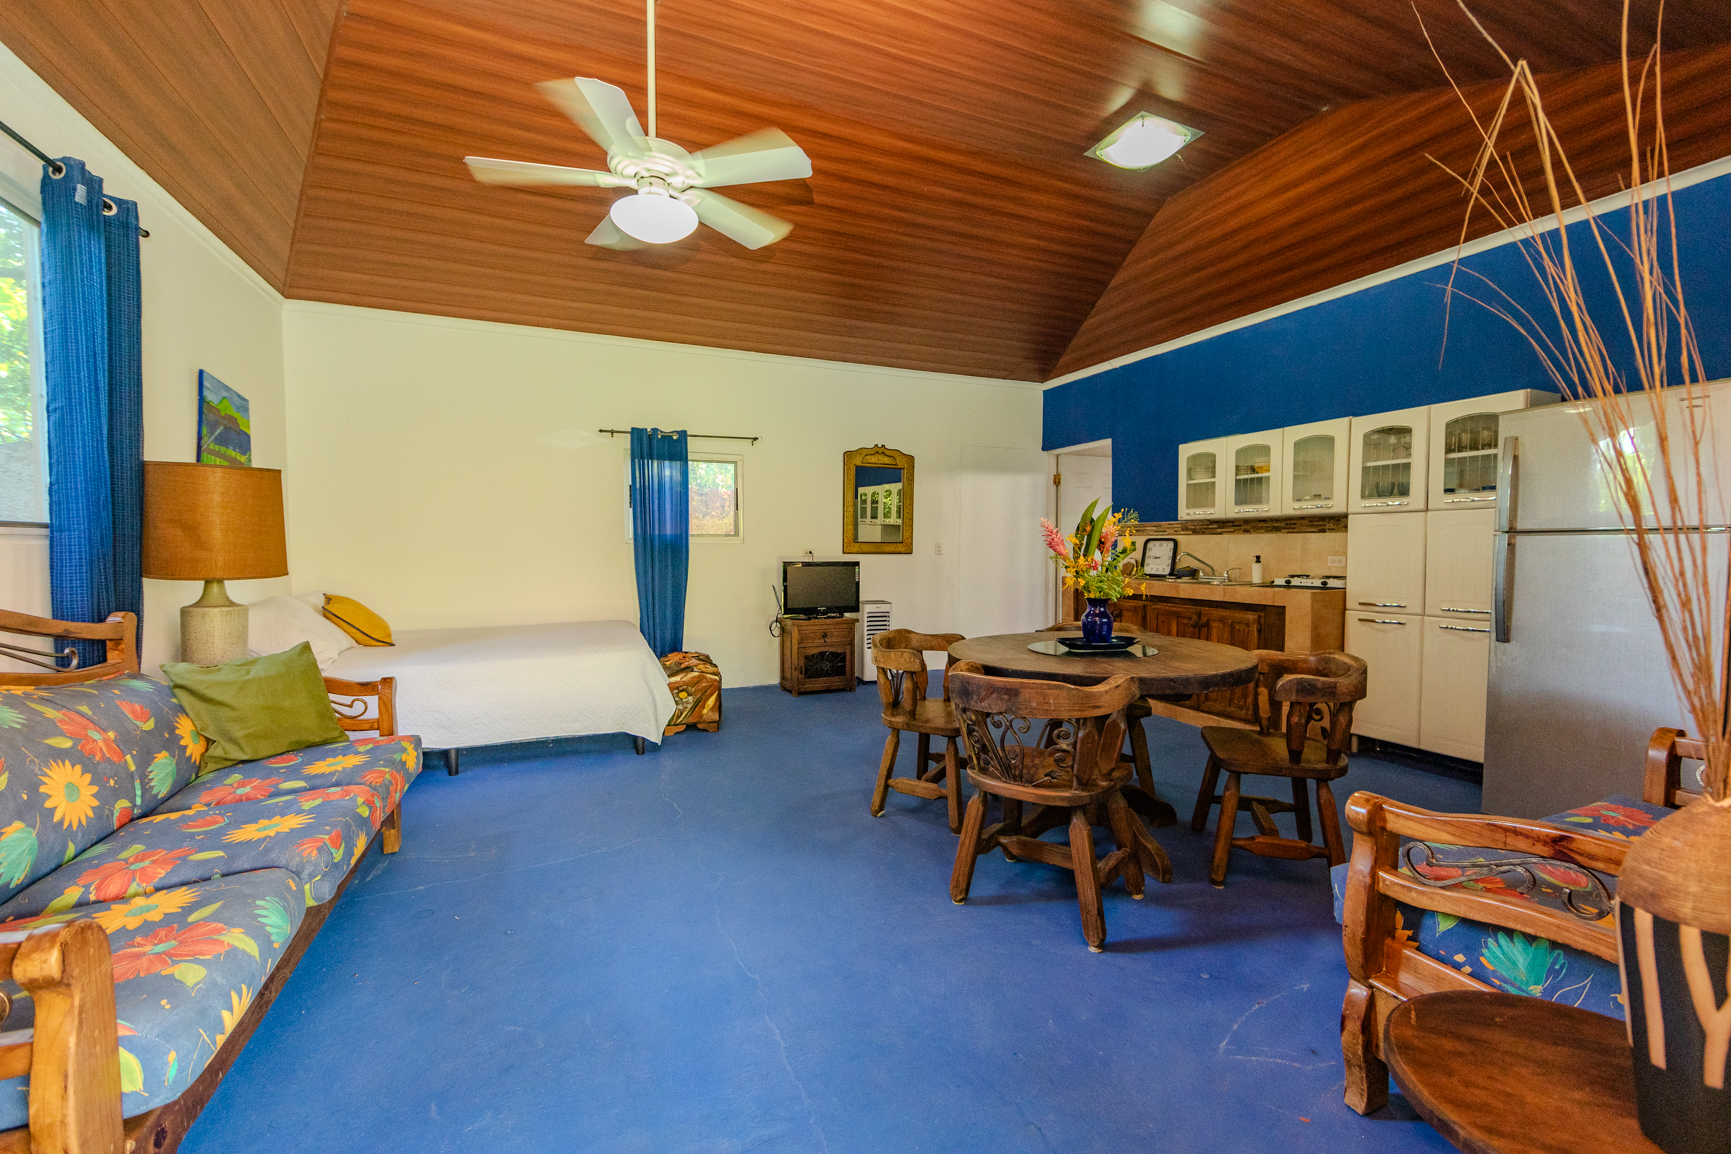 Your Dream Bed & Breakfast Coronado, Panama – A Tropical Beach Oasis Awaits